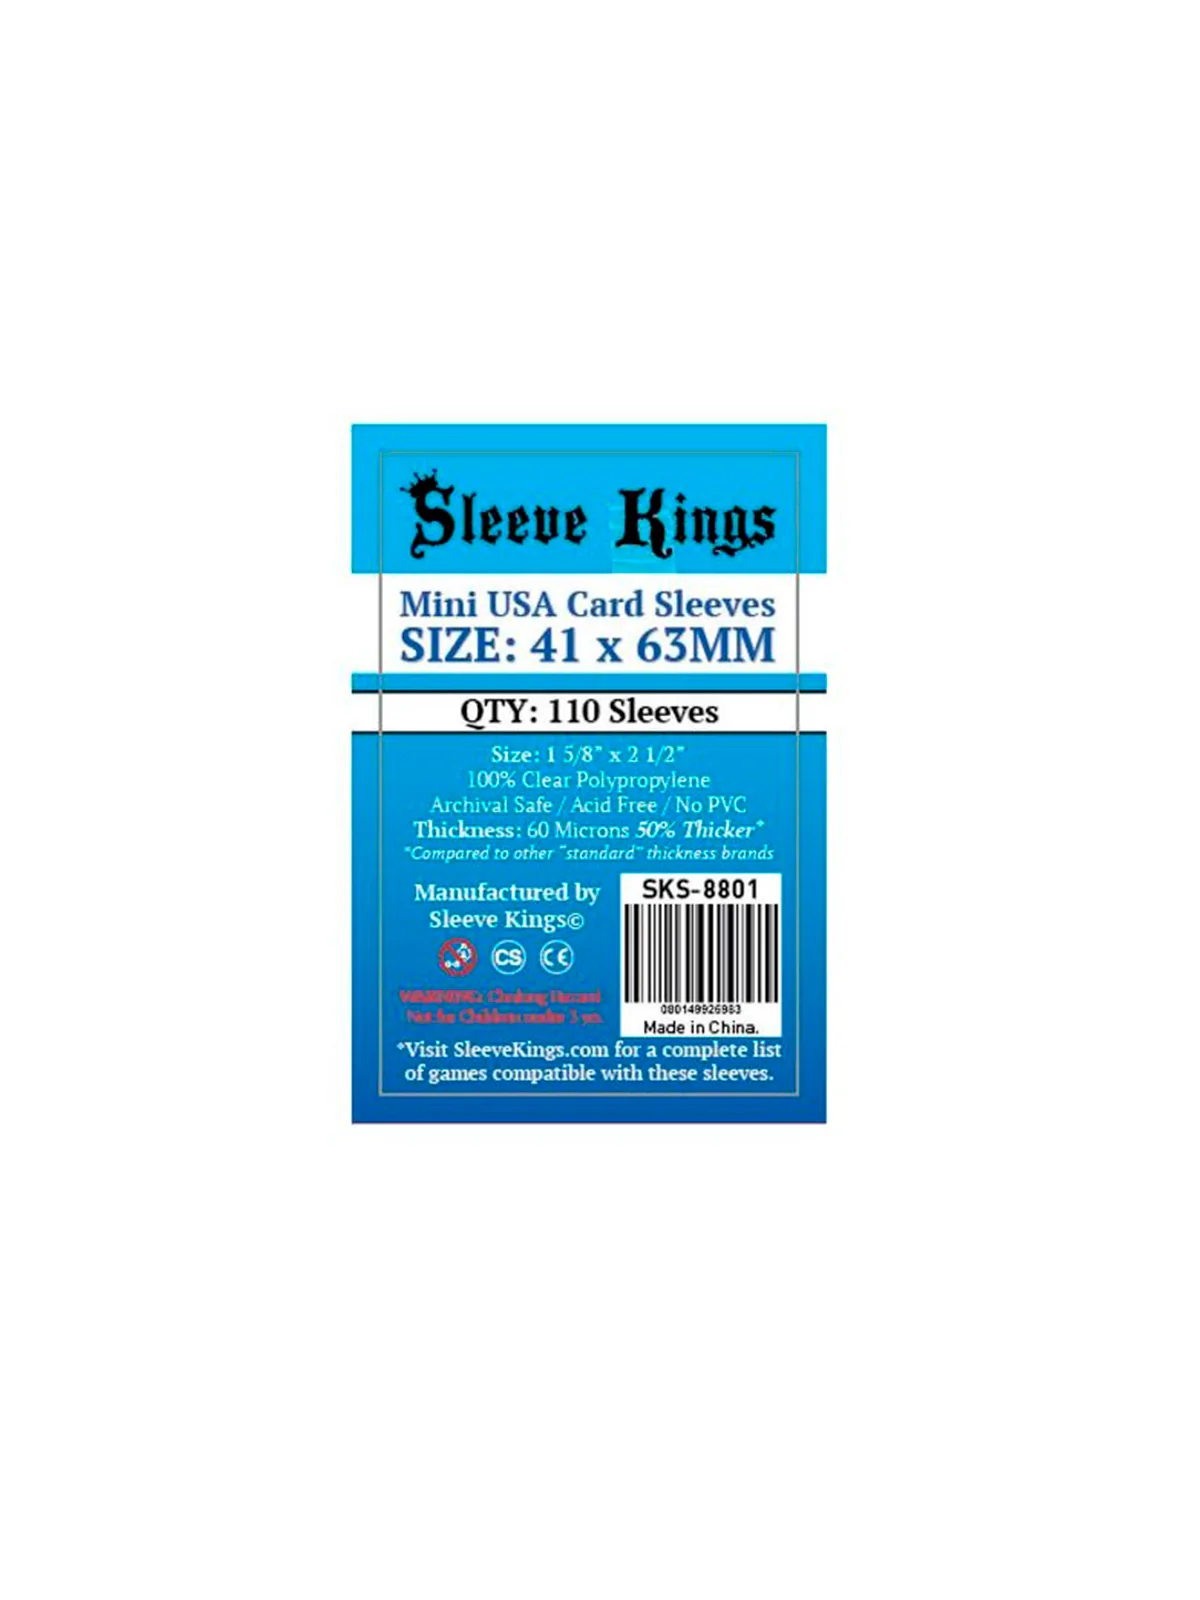 Comprar [8801] Sleeve Kings Mini USA Card Sleeves (41x63mm) barato al 